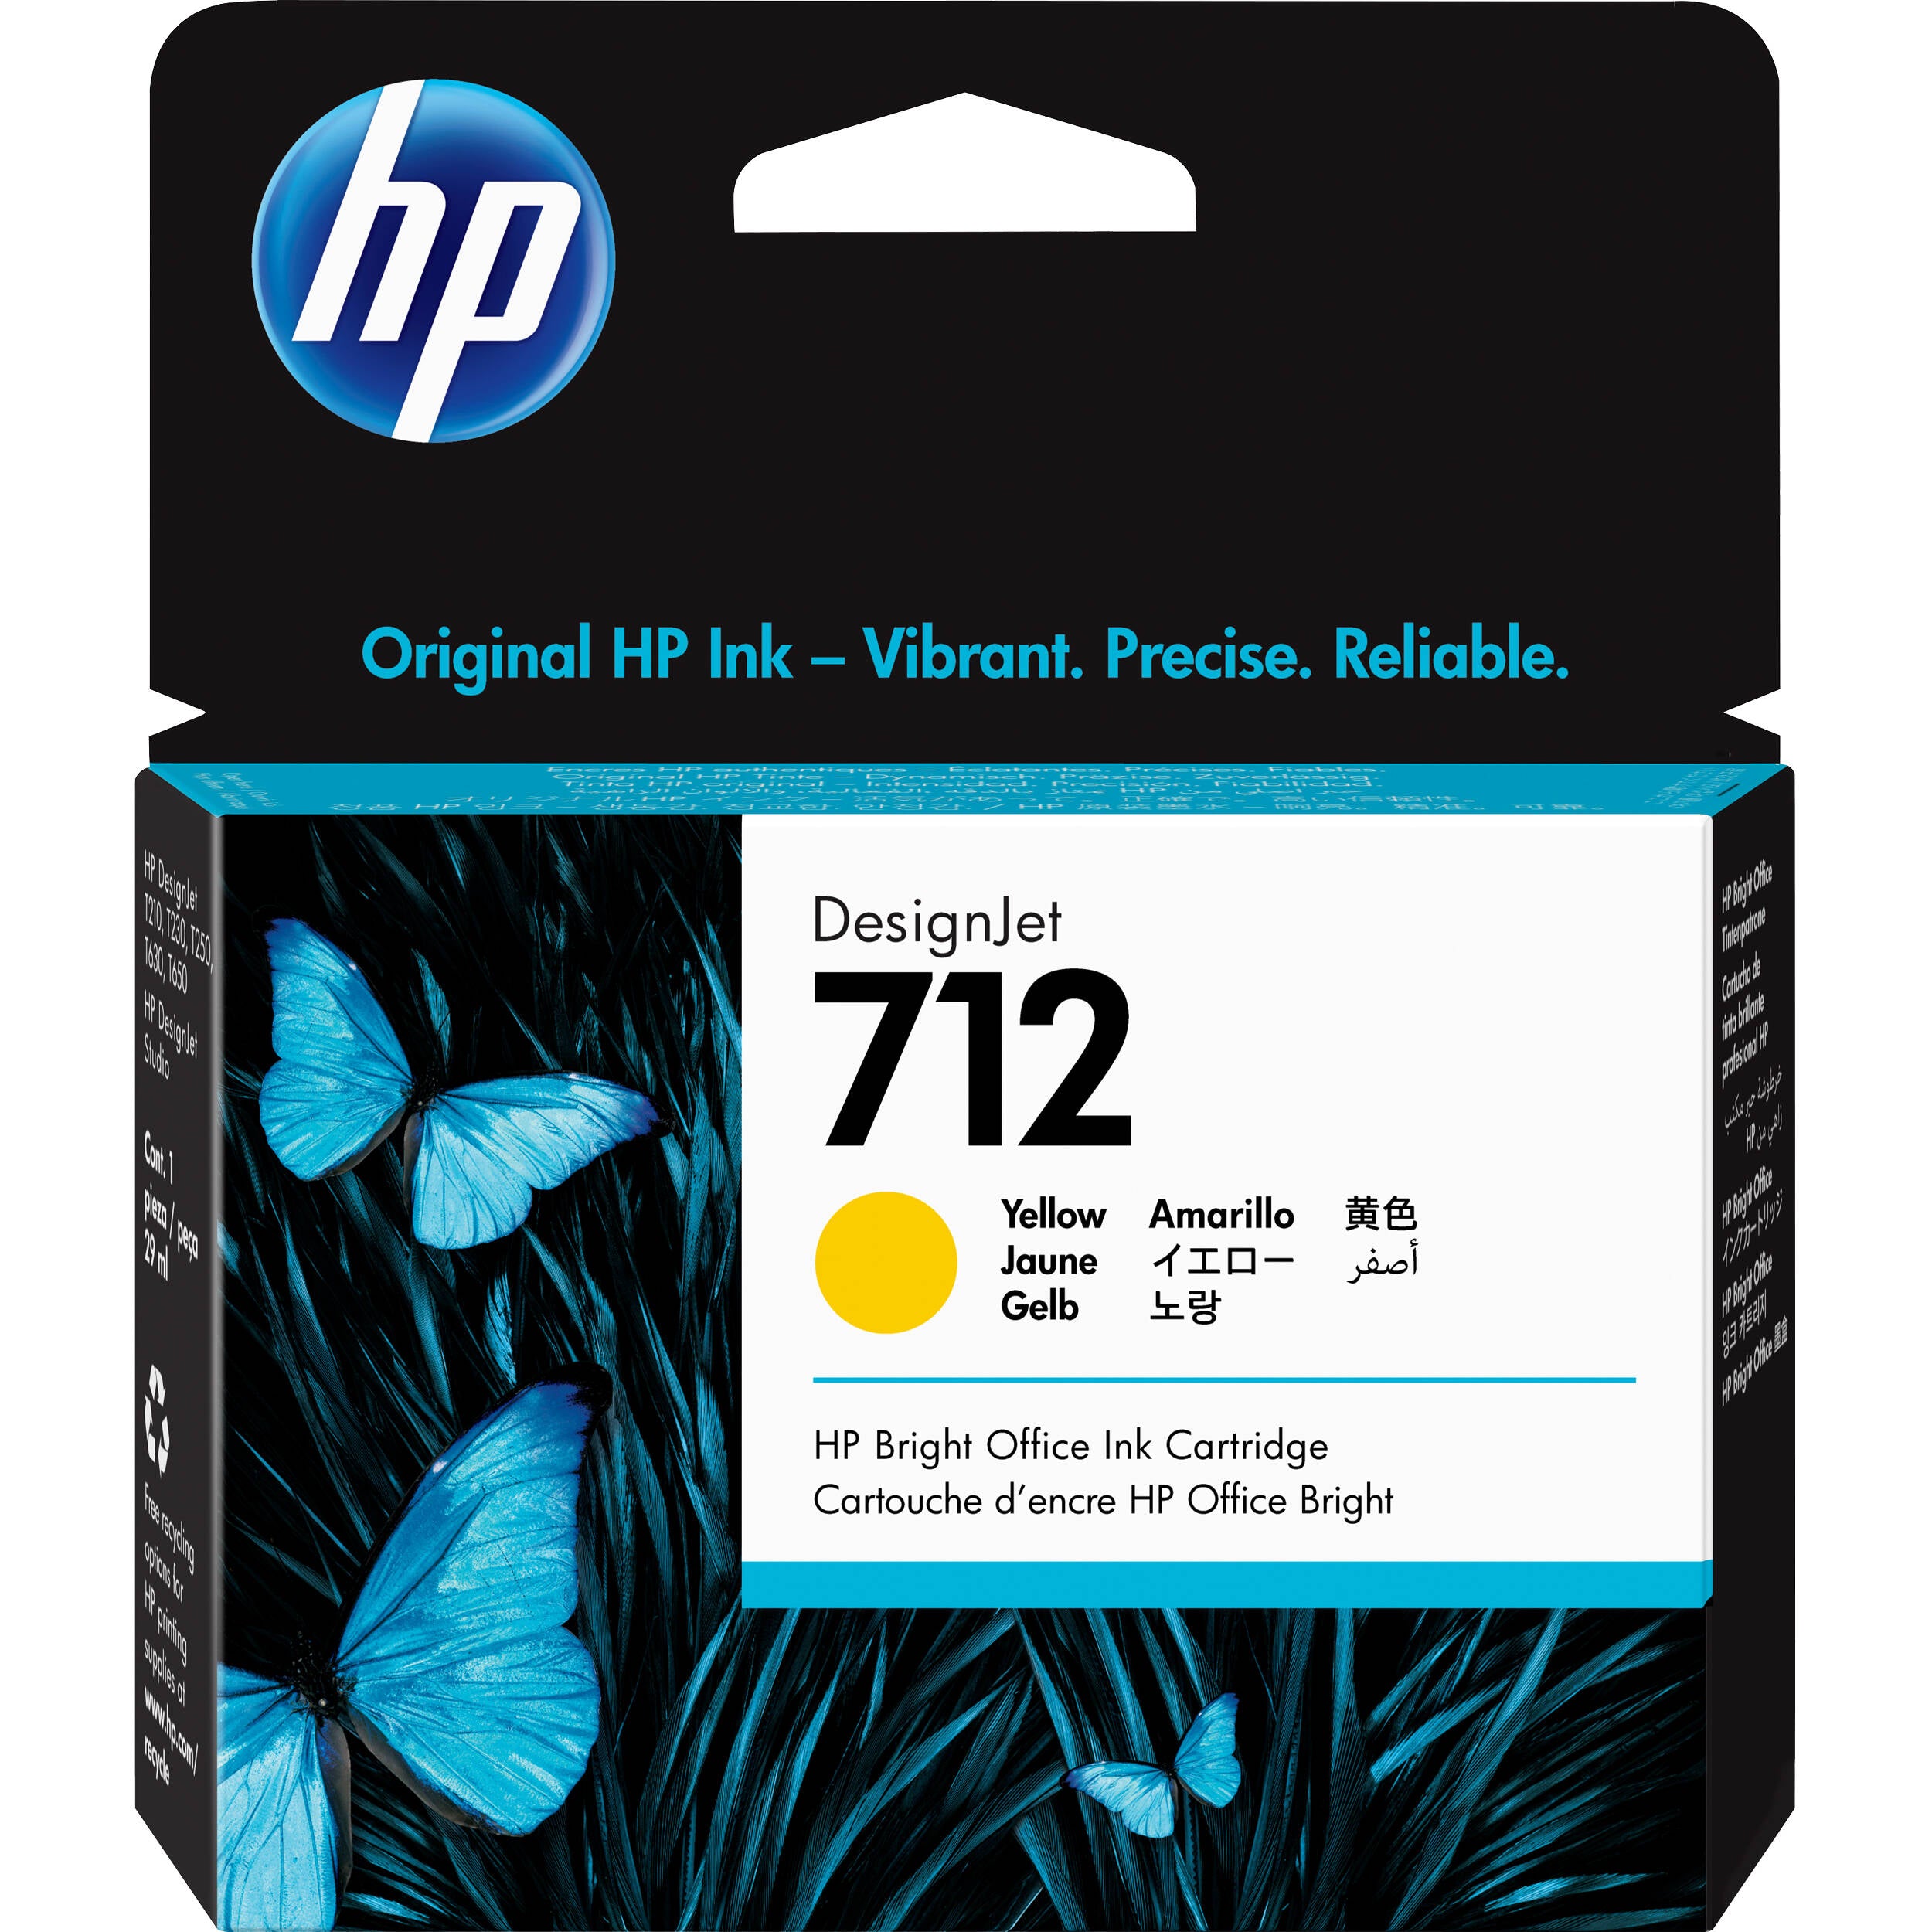 HP 712 Ink Cartridges for HP DesignJet T210 T230 T250 T630 T650